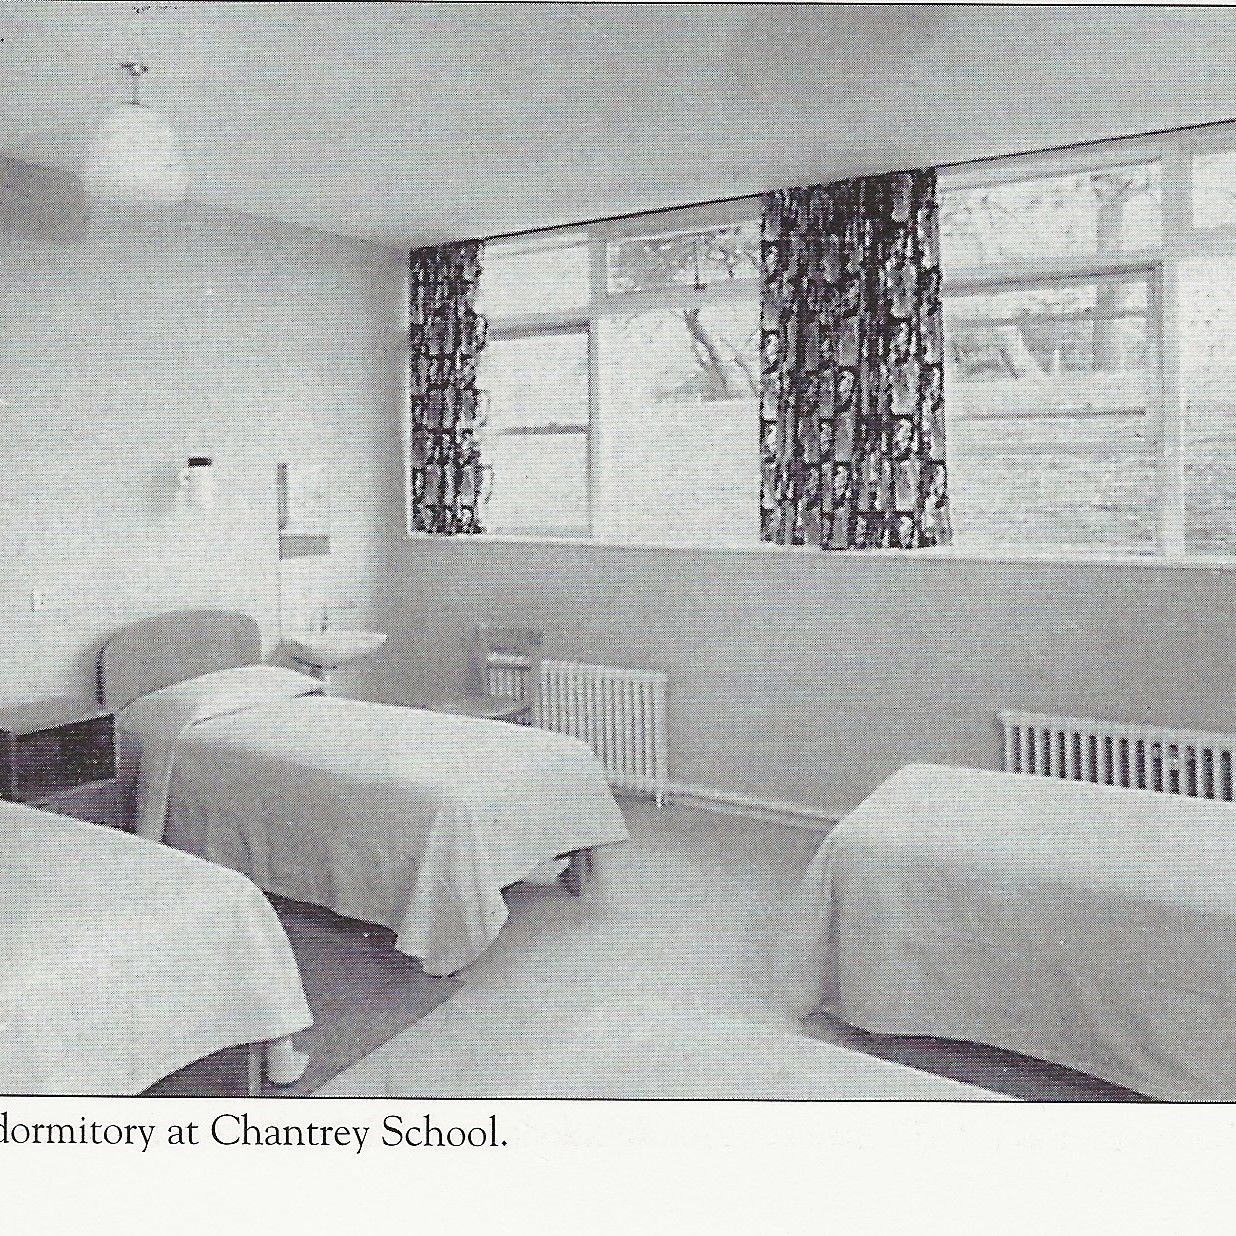 Dormitory at Chantrey School Matthews Lane opened 1962